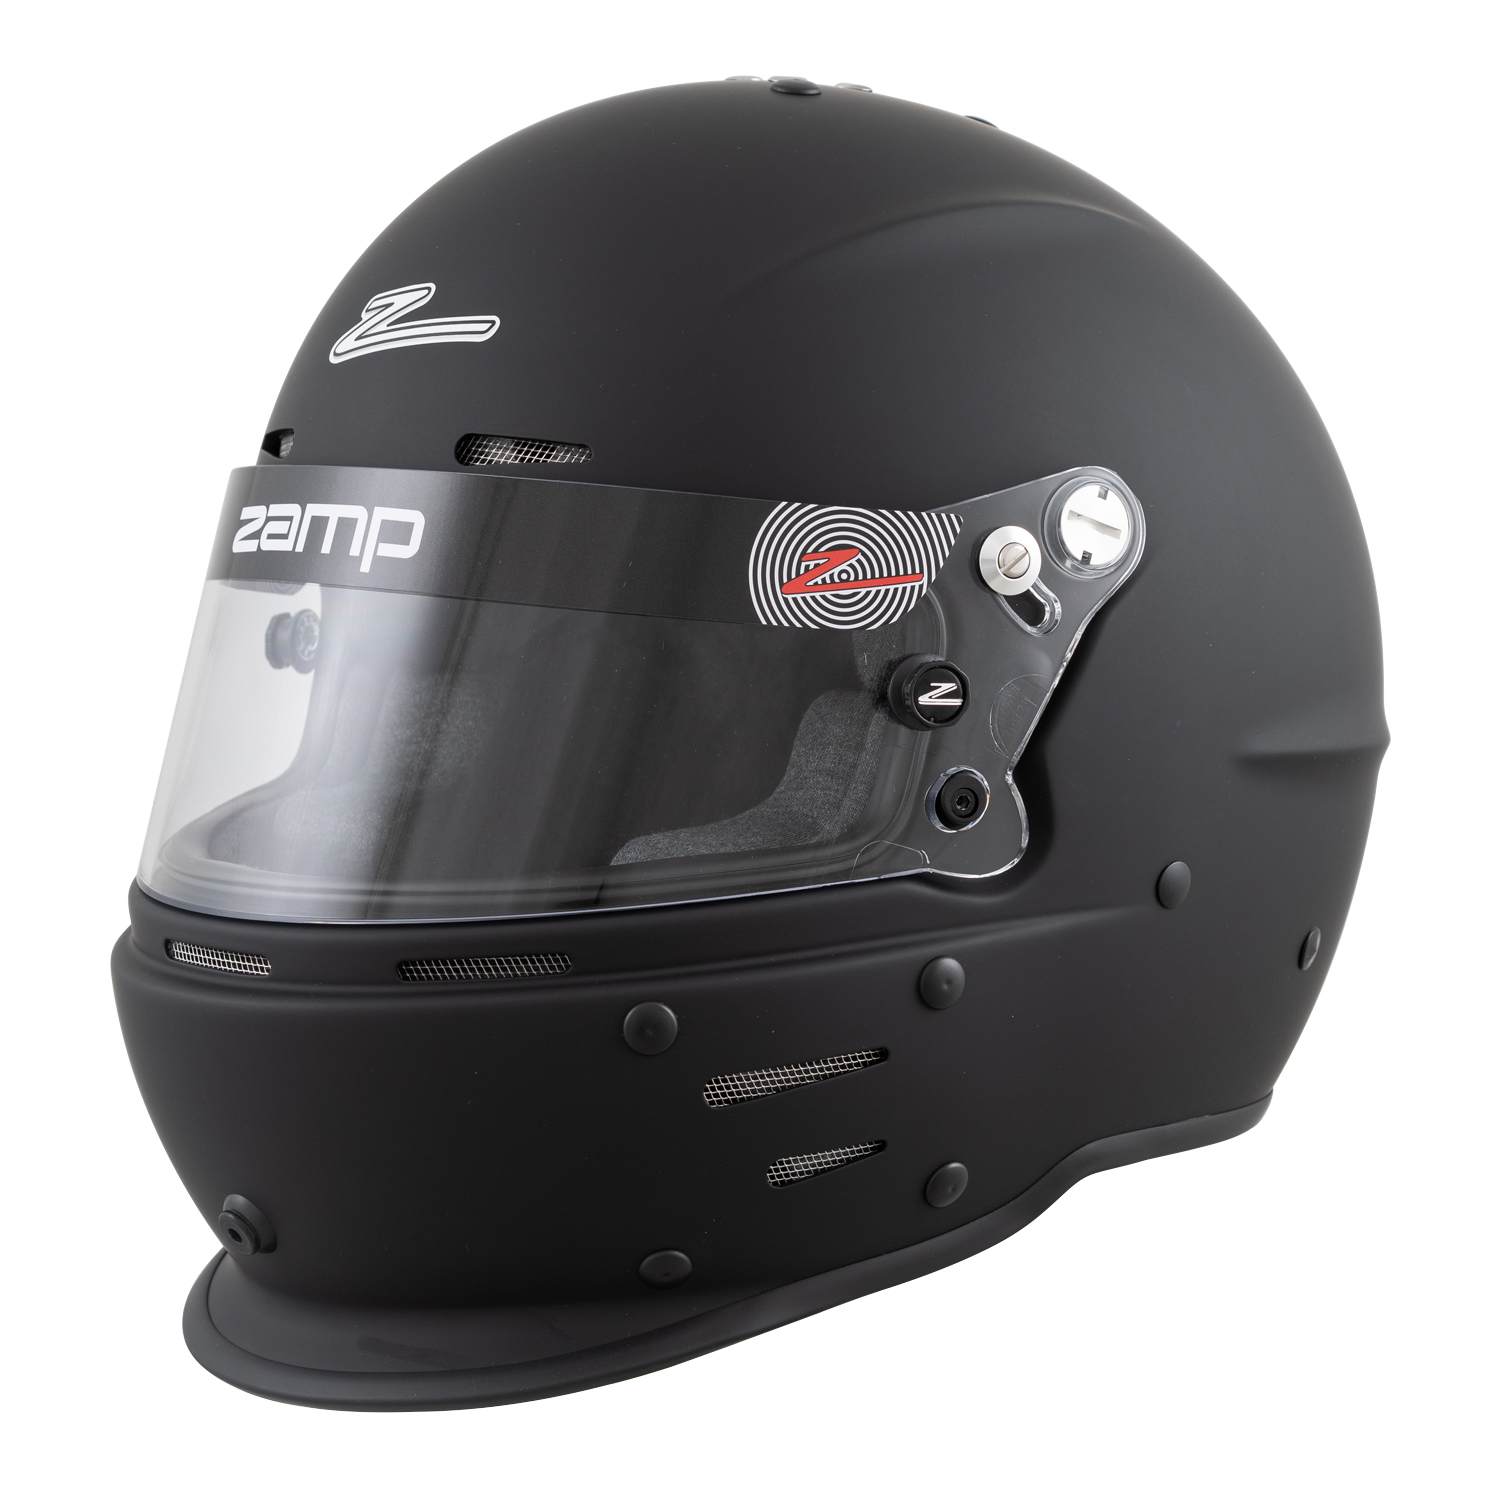 Zamp Helmet Gold Prism Visor RZ62 RZ70 RZ42 RZ44 RZ59  ORCi Karting 